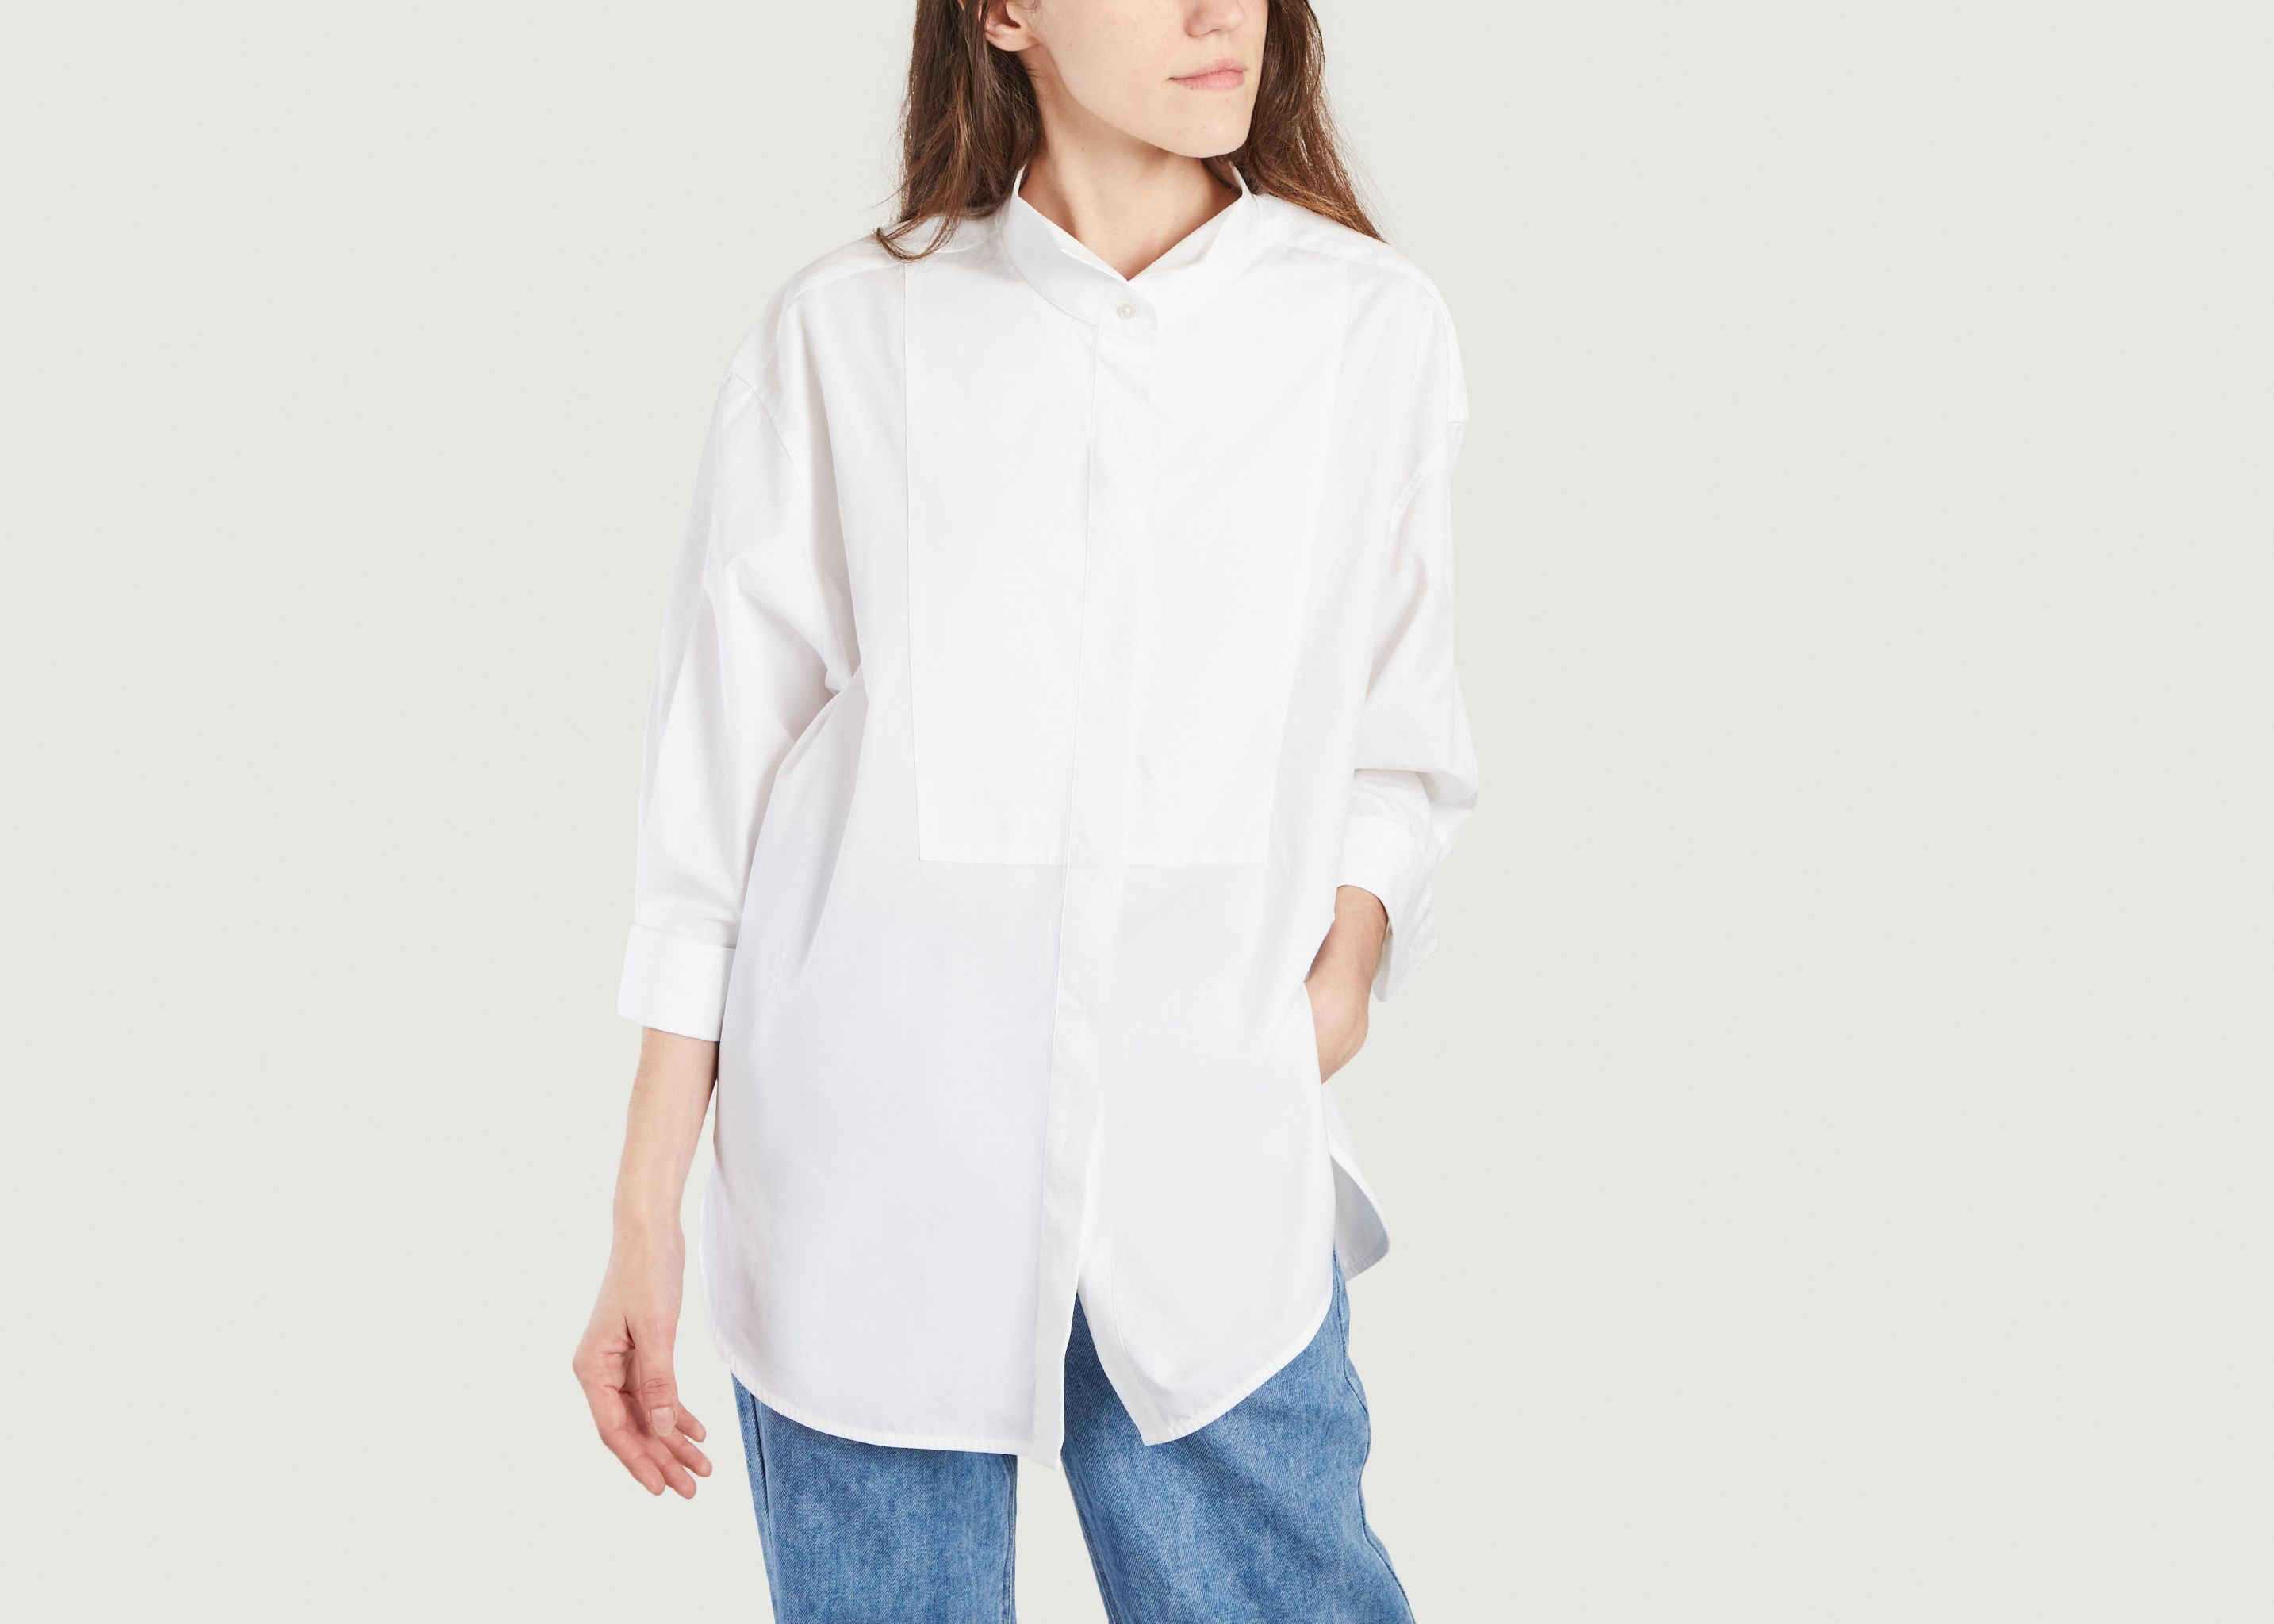 Diane cotton shirt - Chloé Stora